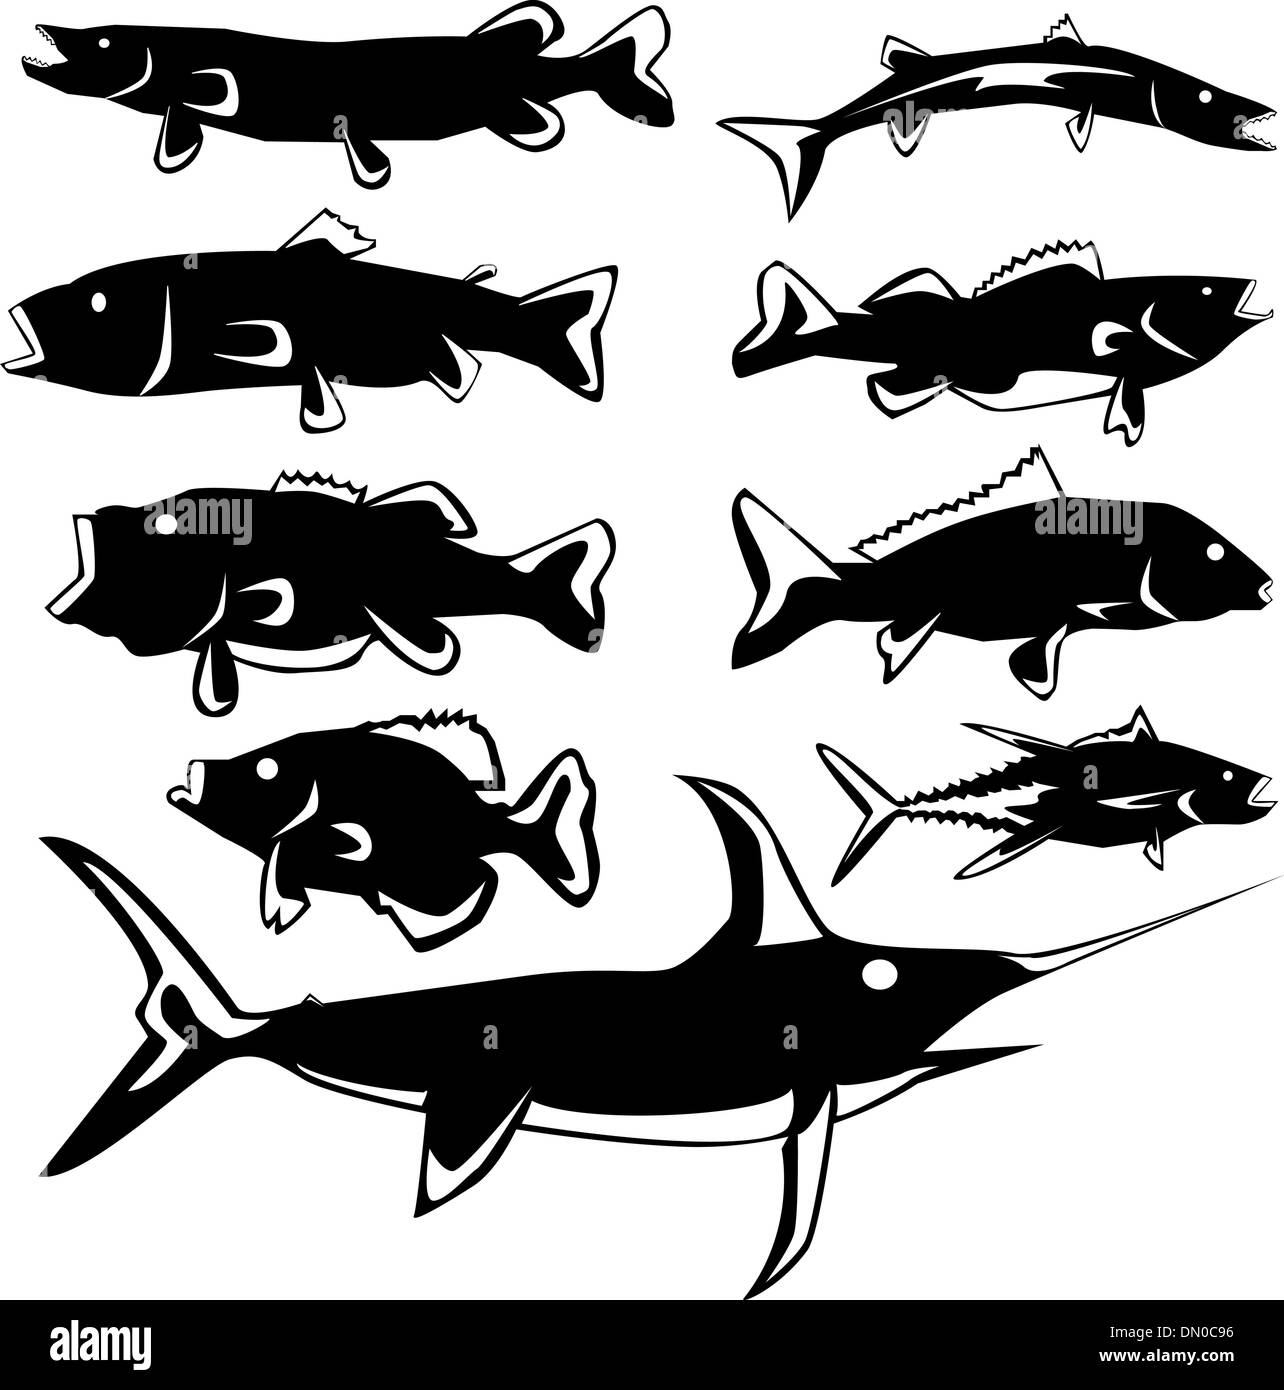 Fish assortment vector silhouettes Stock Vector